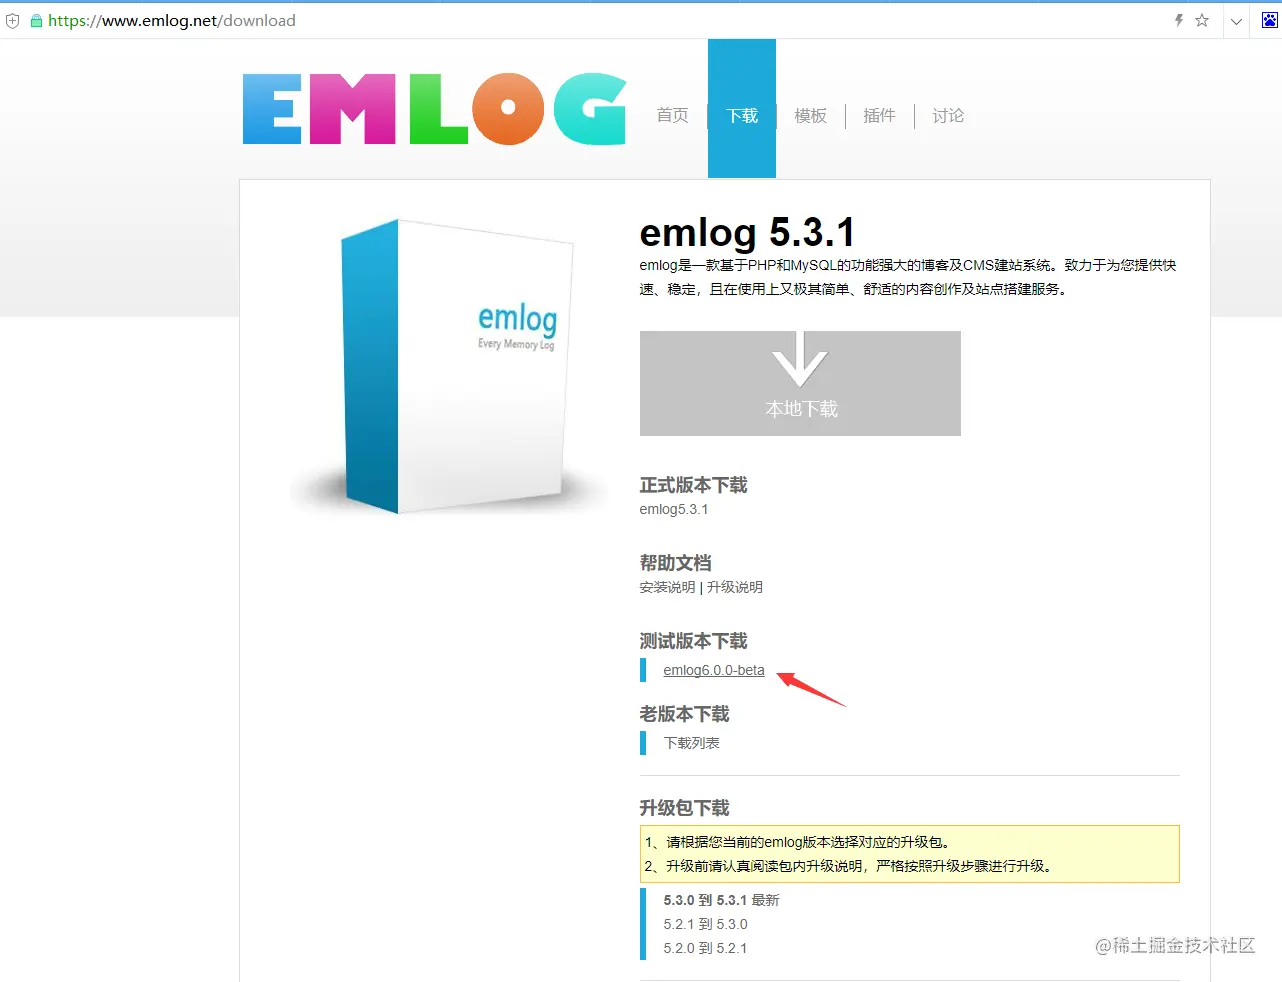 EMLOG 6.0